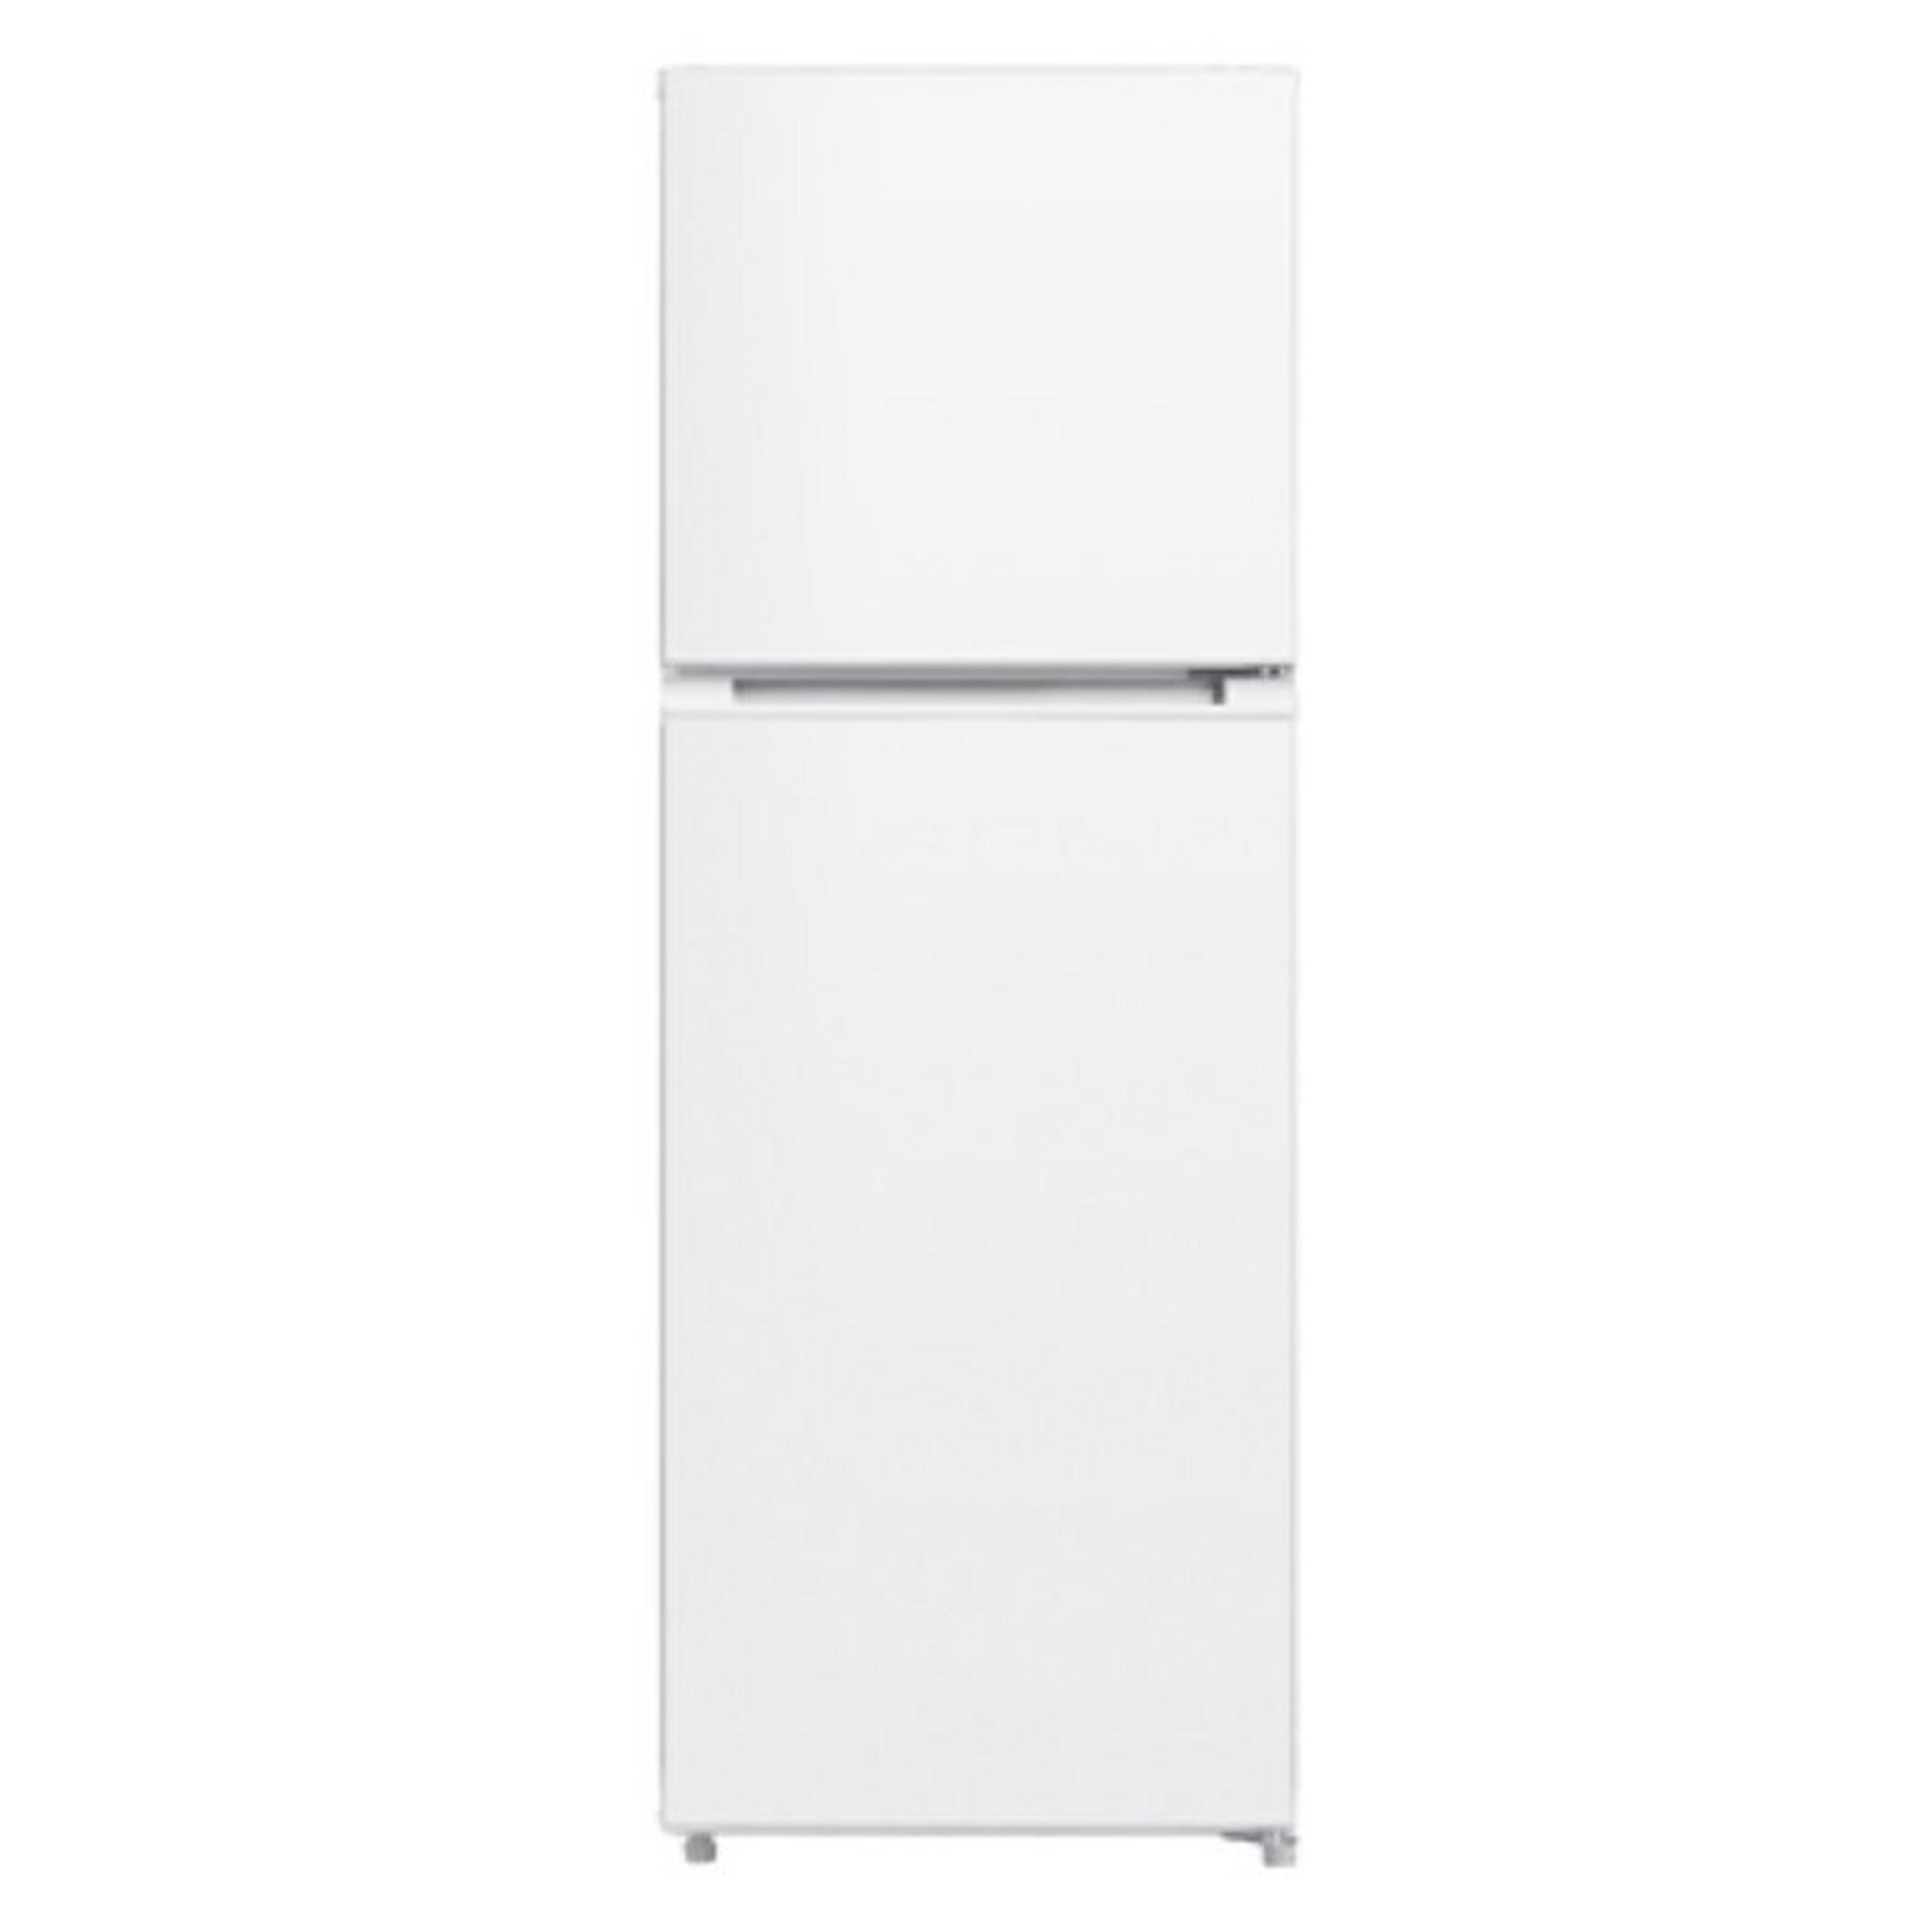 Wansa Top Mount Refrigerator, 12.8CFT, 364-Liters, WRTG-364-NFWTC62 - White